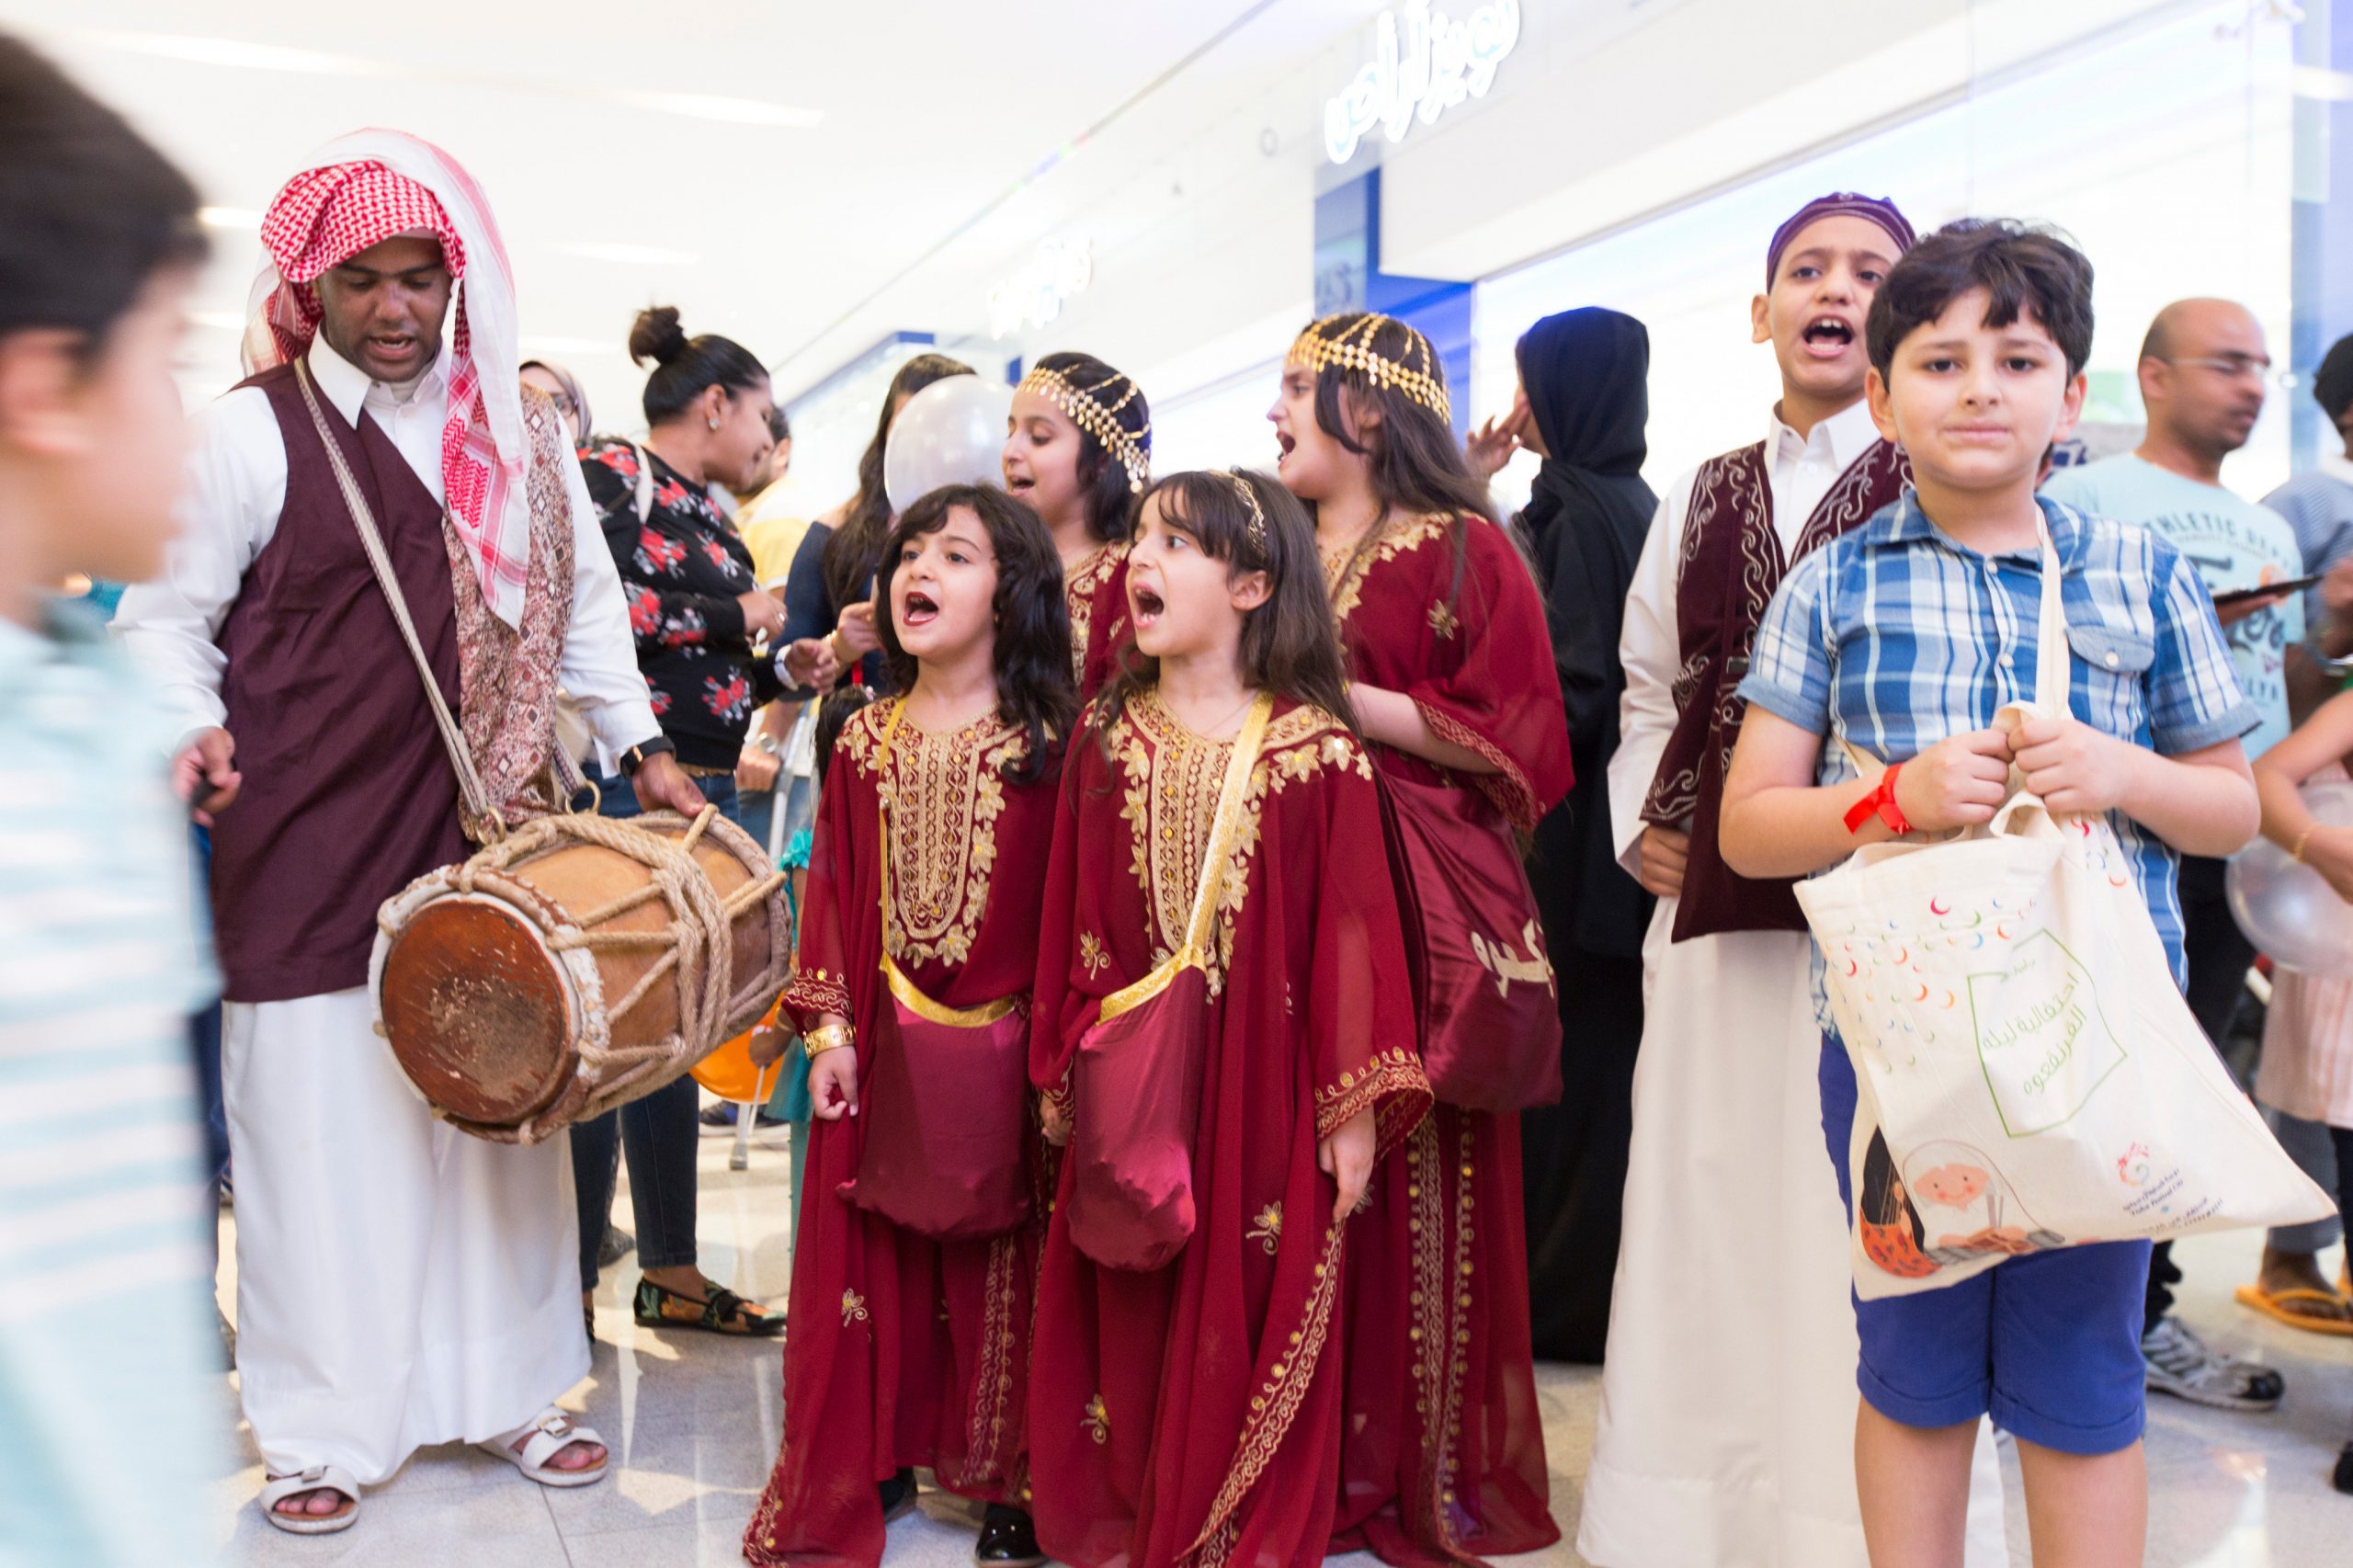 Qatar Tourism Hosts Garangao Celebrations at Doha Corniche - A Guide to the Fun-Filled Evening